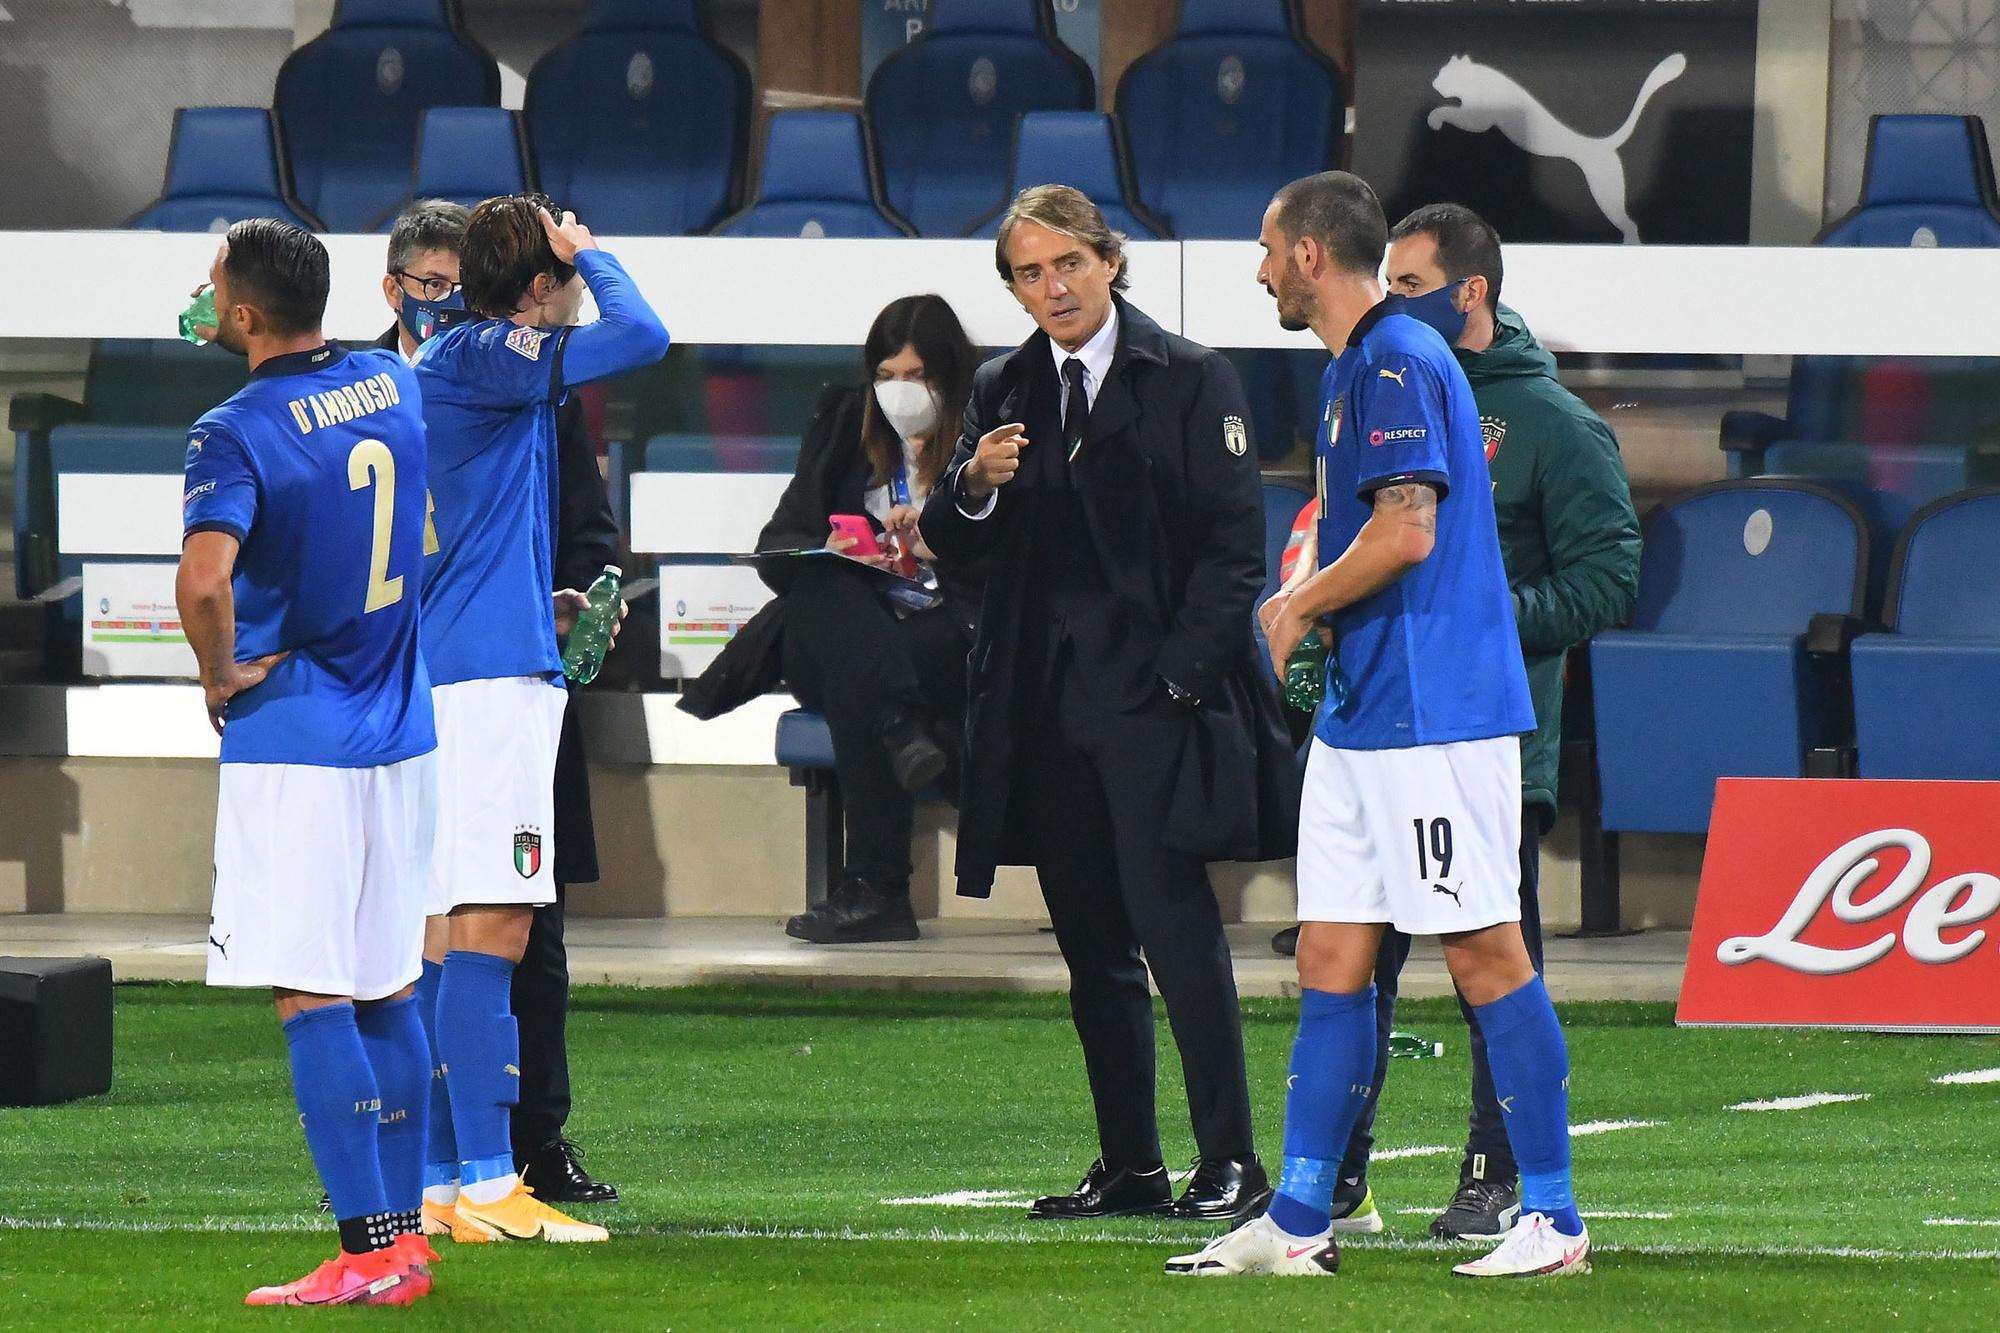 Roberto Mancini, de architect van de Italiaanse ploeg